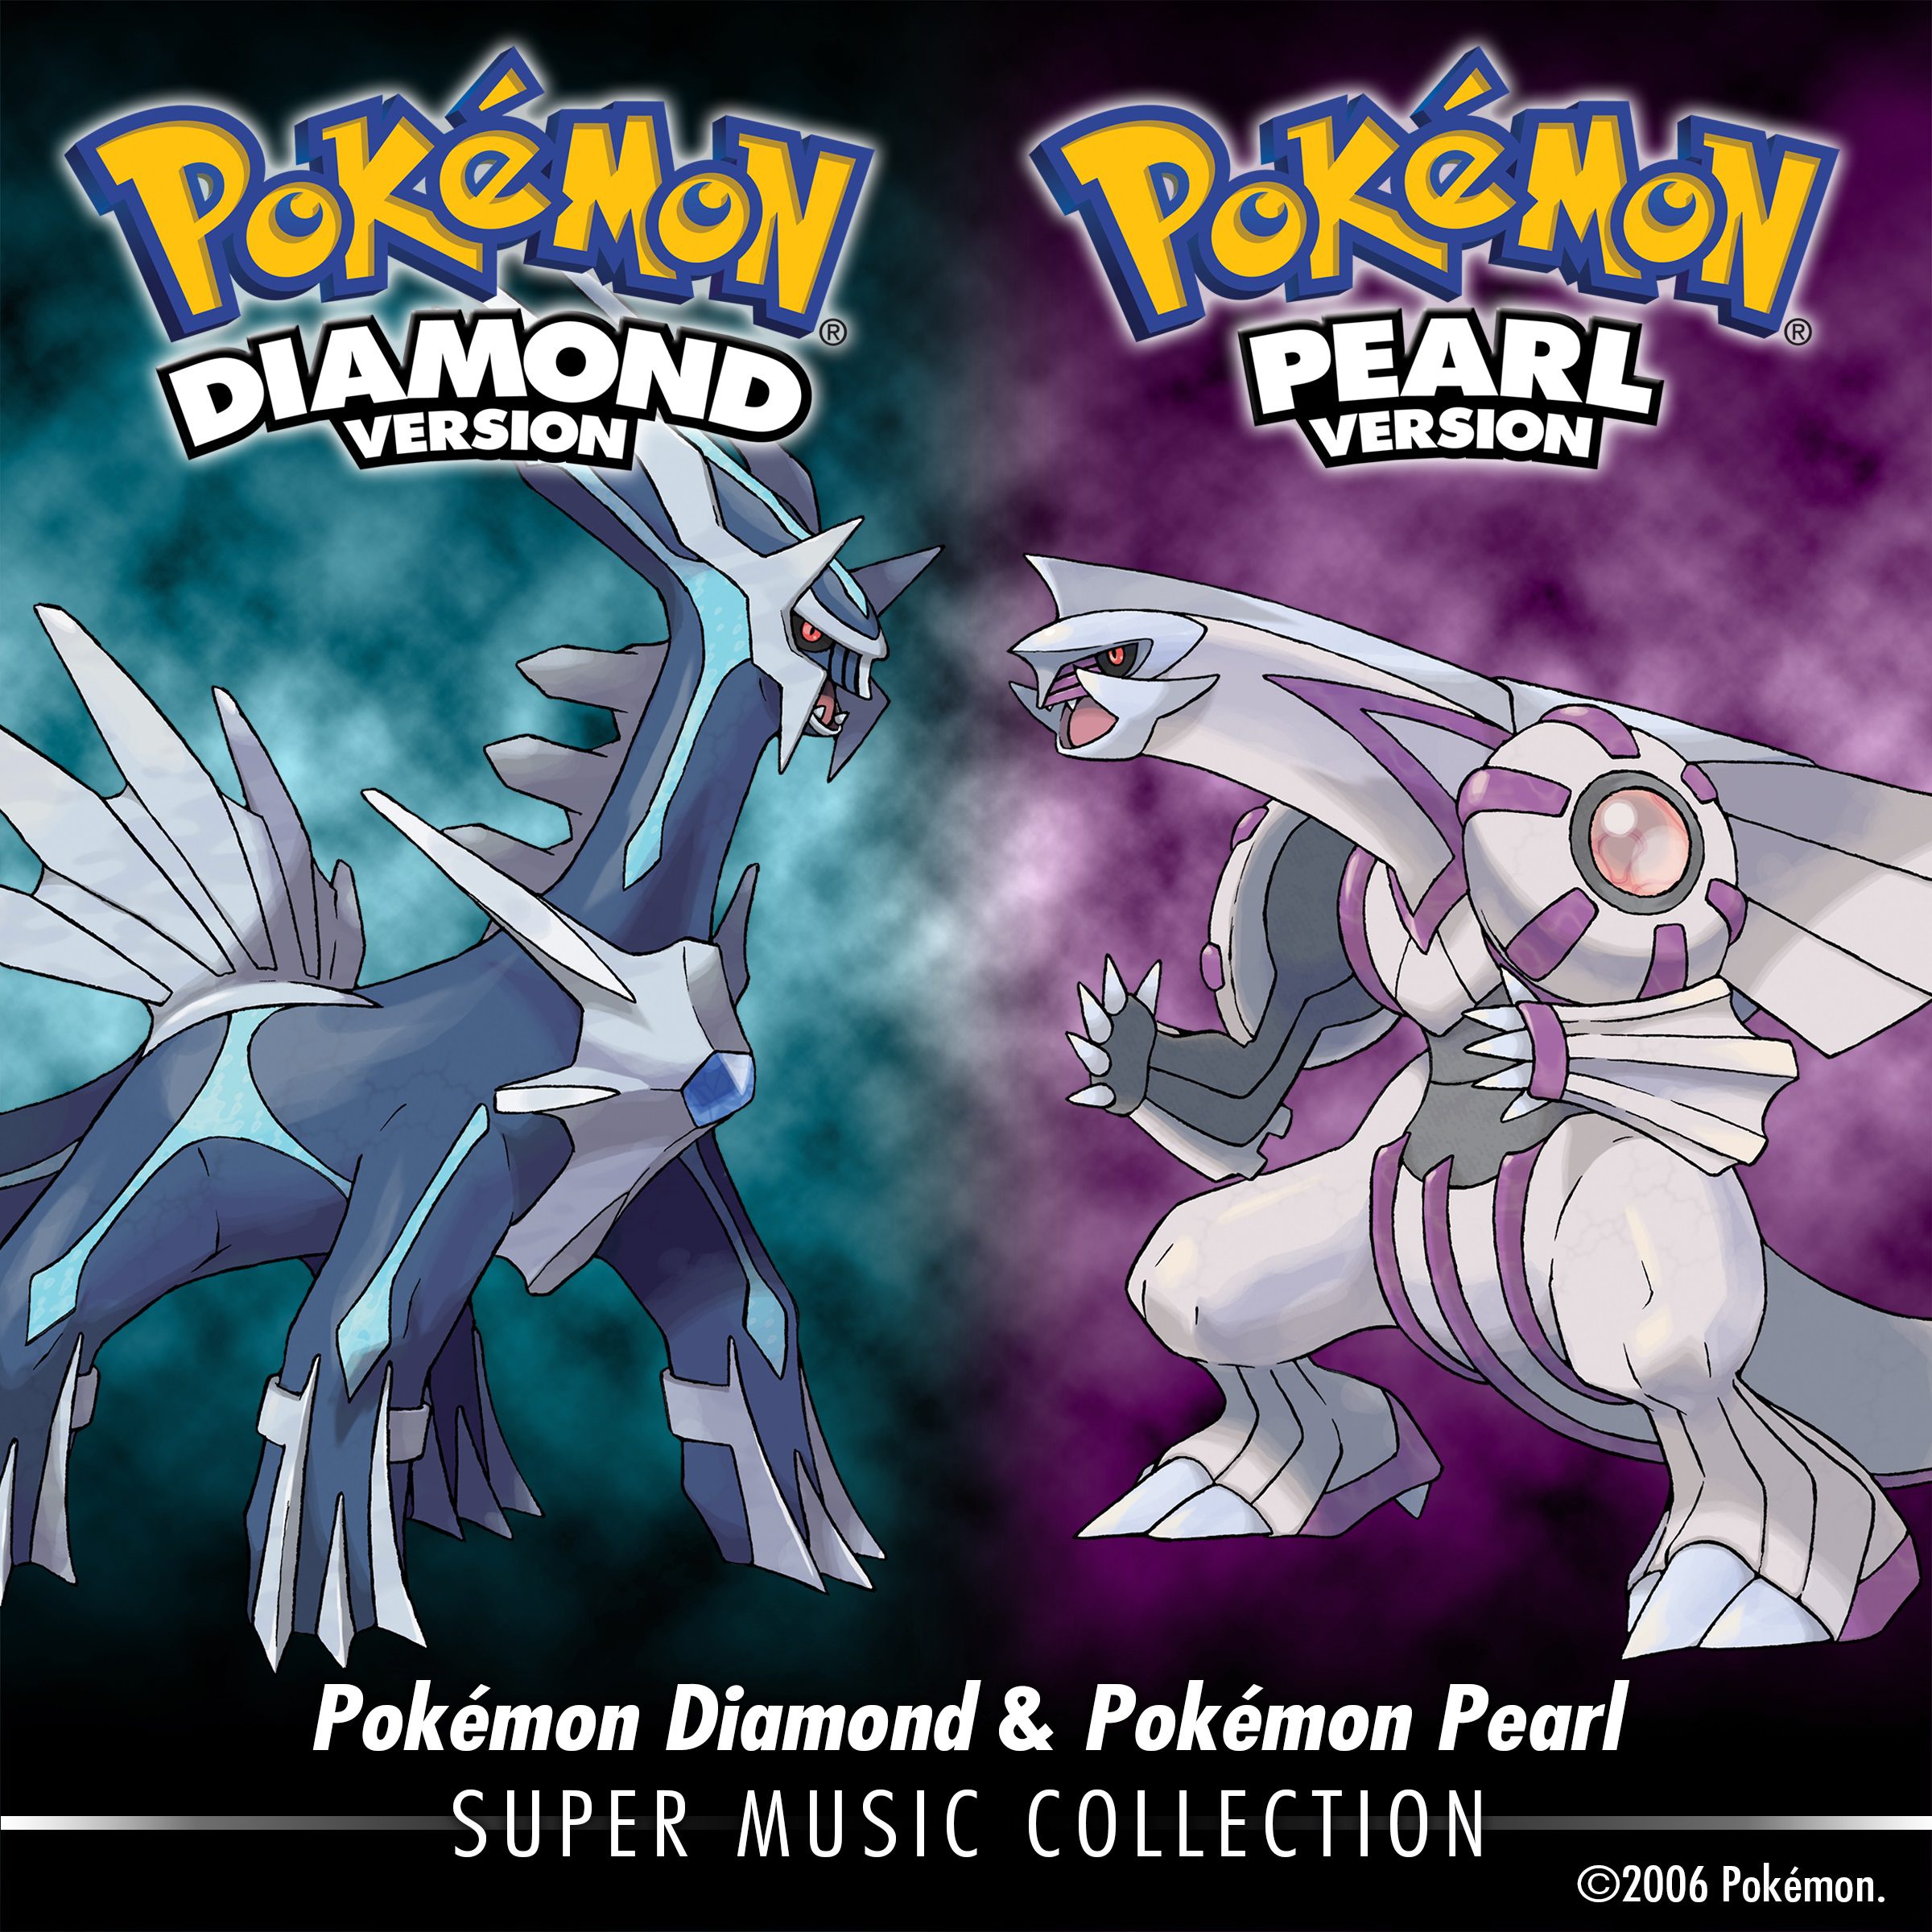 Pokémon Diamond & Pokémon Pearl: Super Music Collection Soundtrack